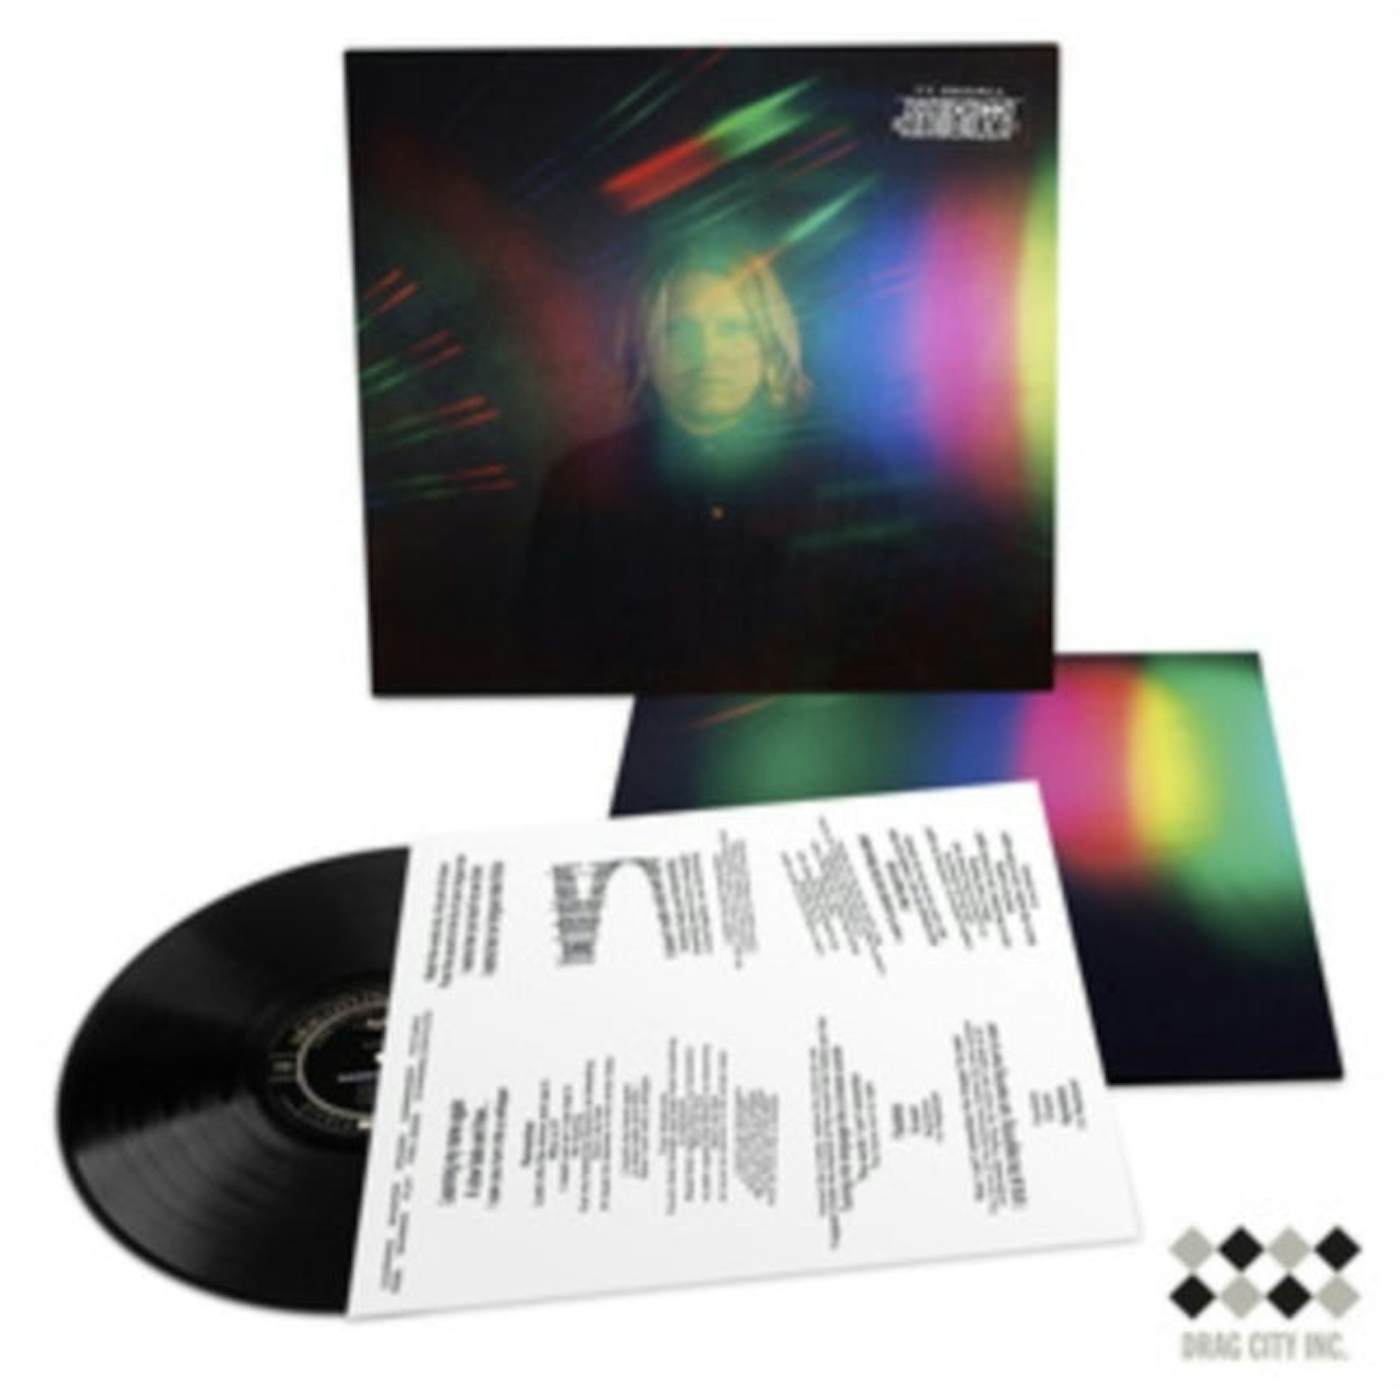 Ty Segall LP Vinyl Record - Harmonizer